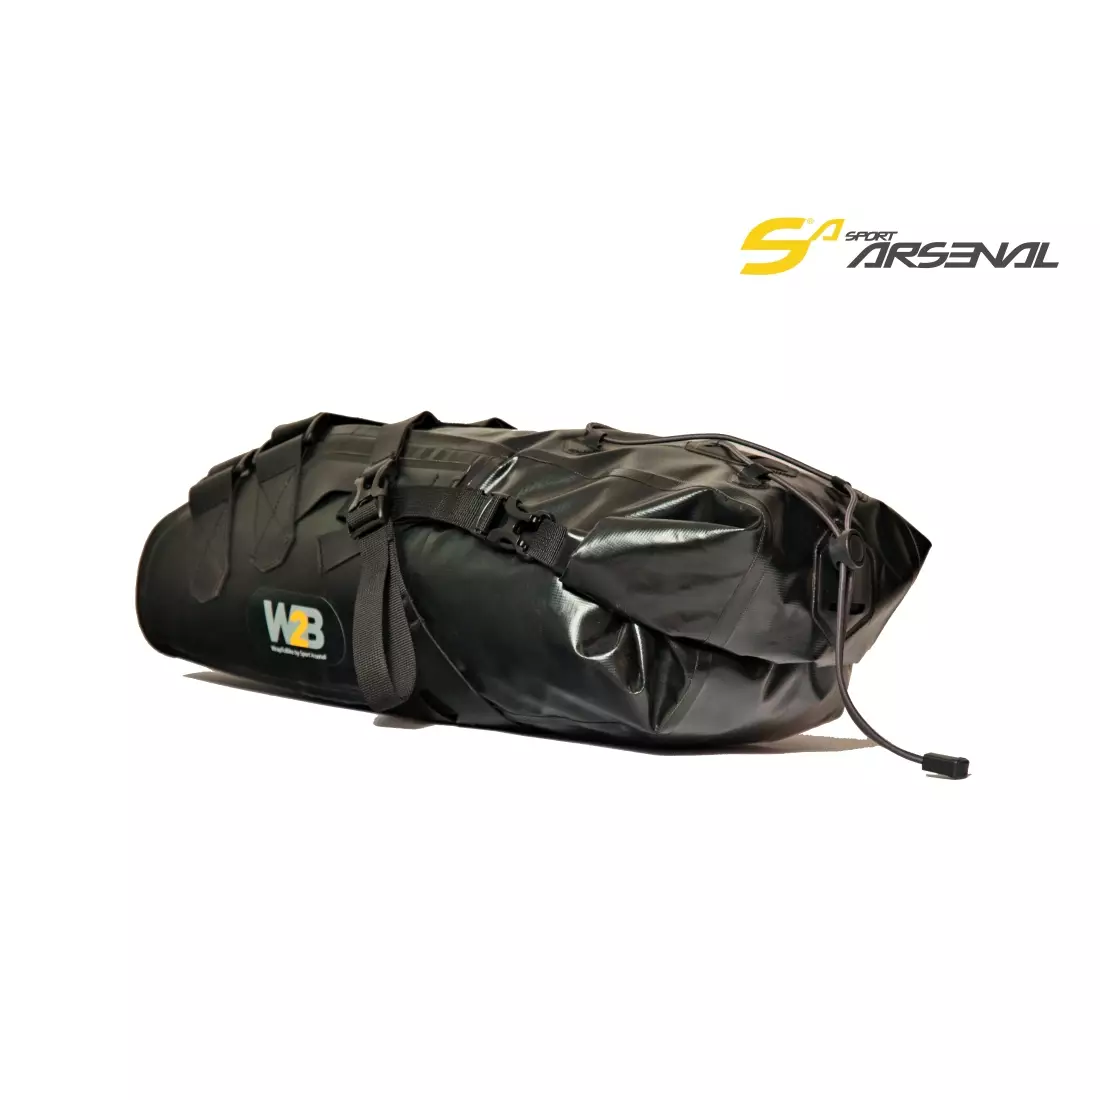 SPORT ARSENAL 612 W2B BikePacking saddle bag, waterproof